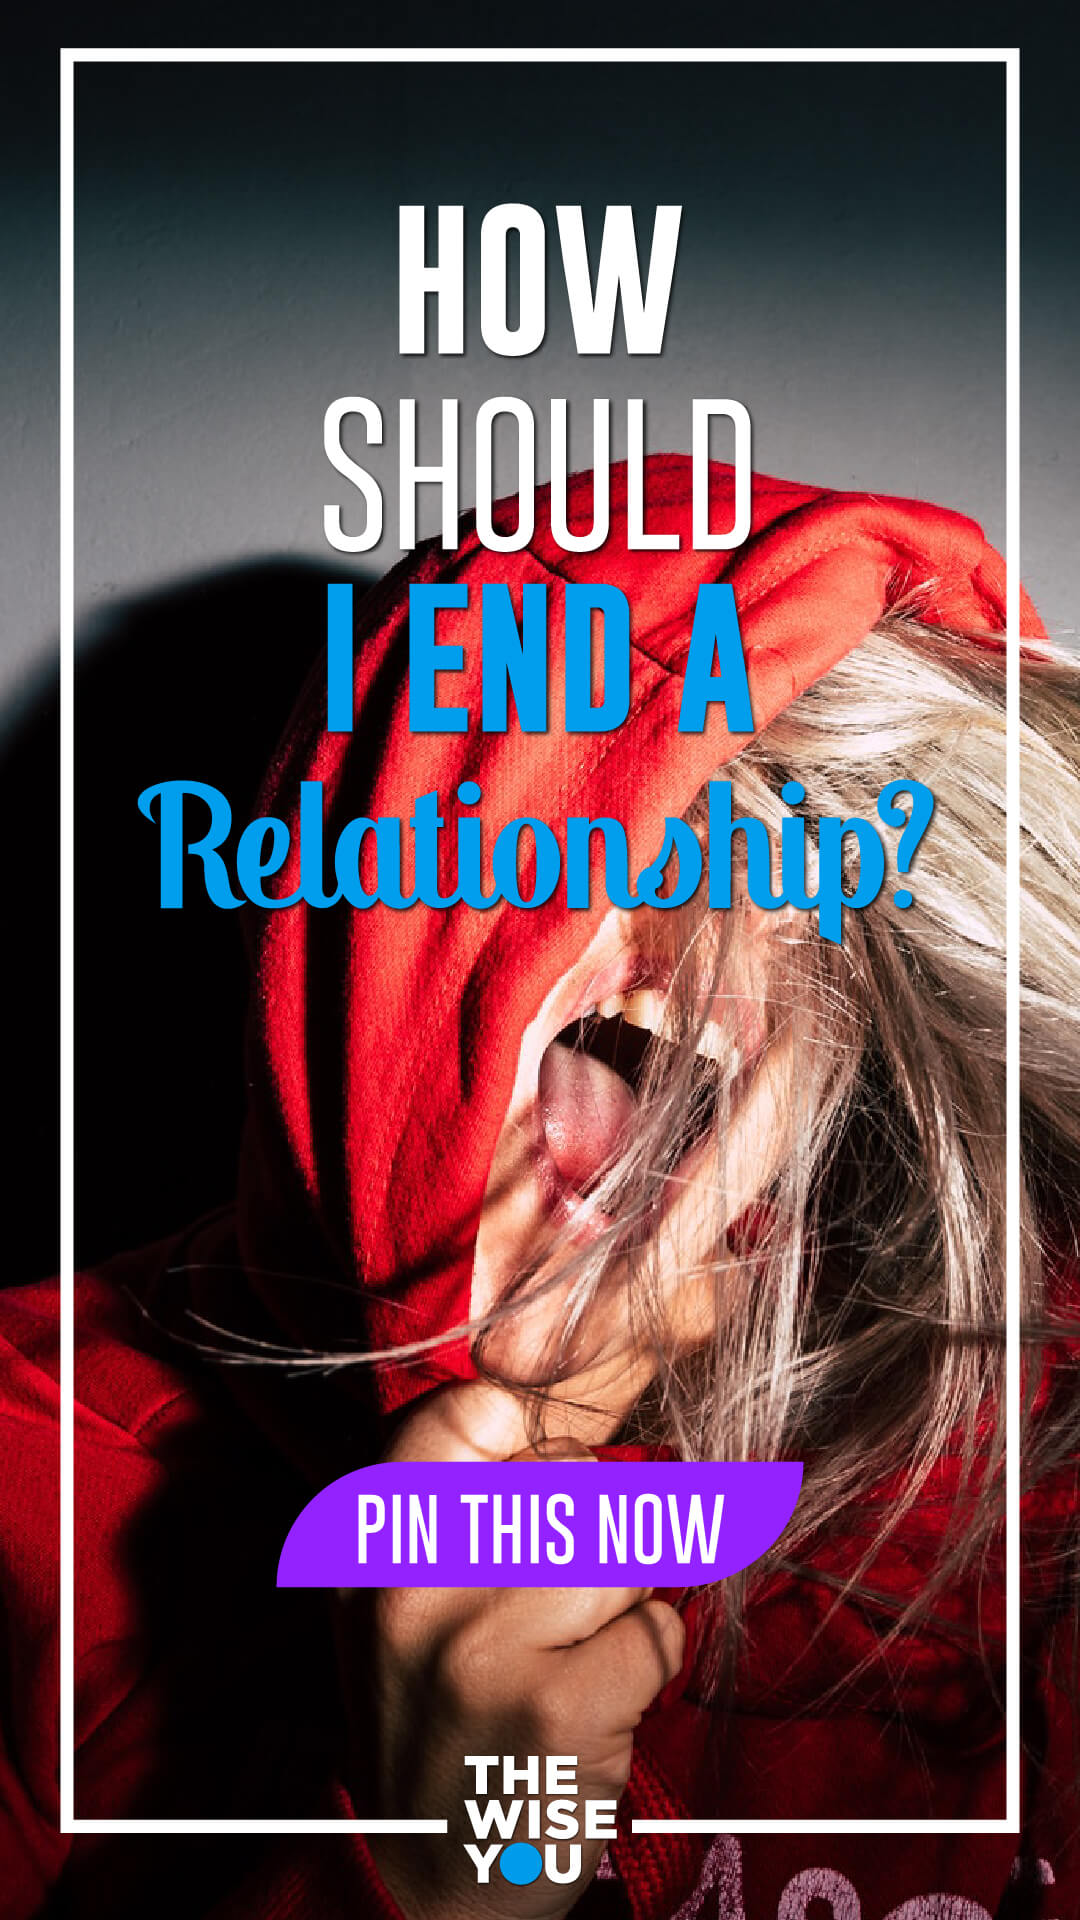 How Should I End a Relationship?